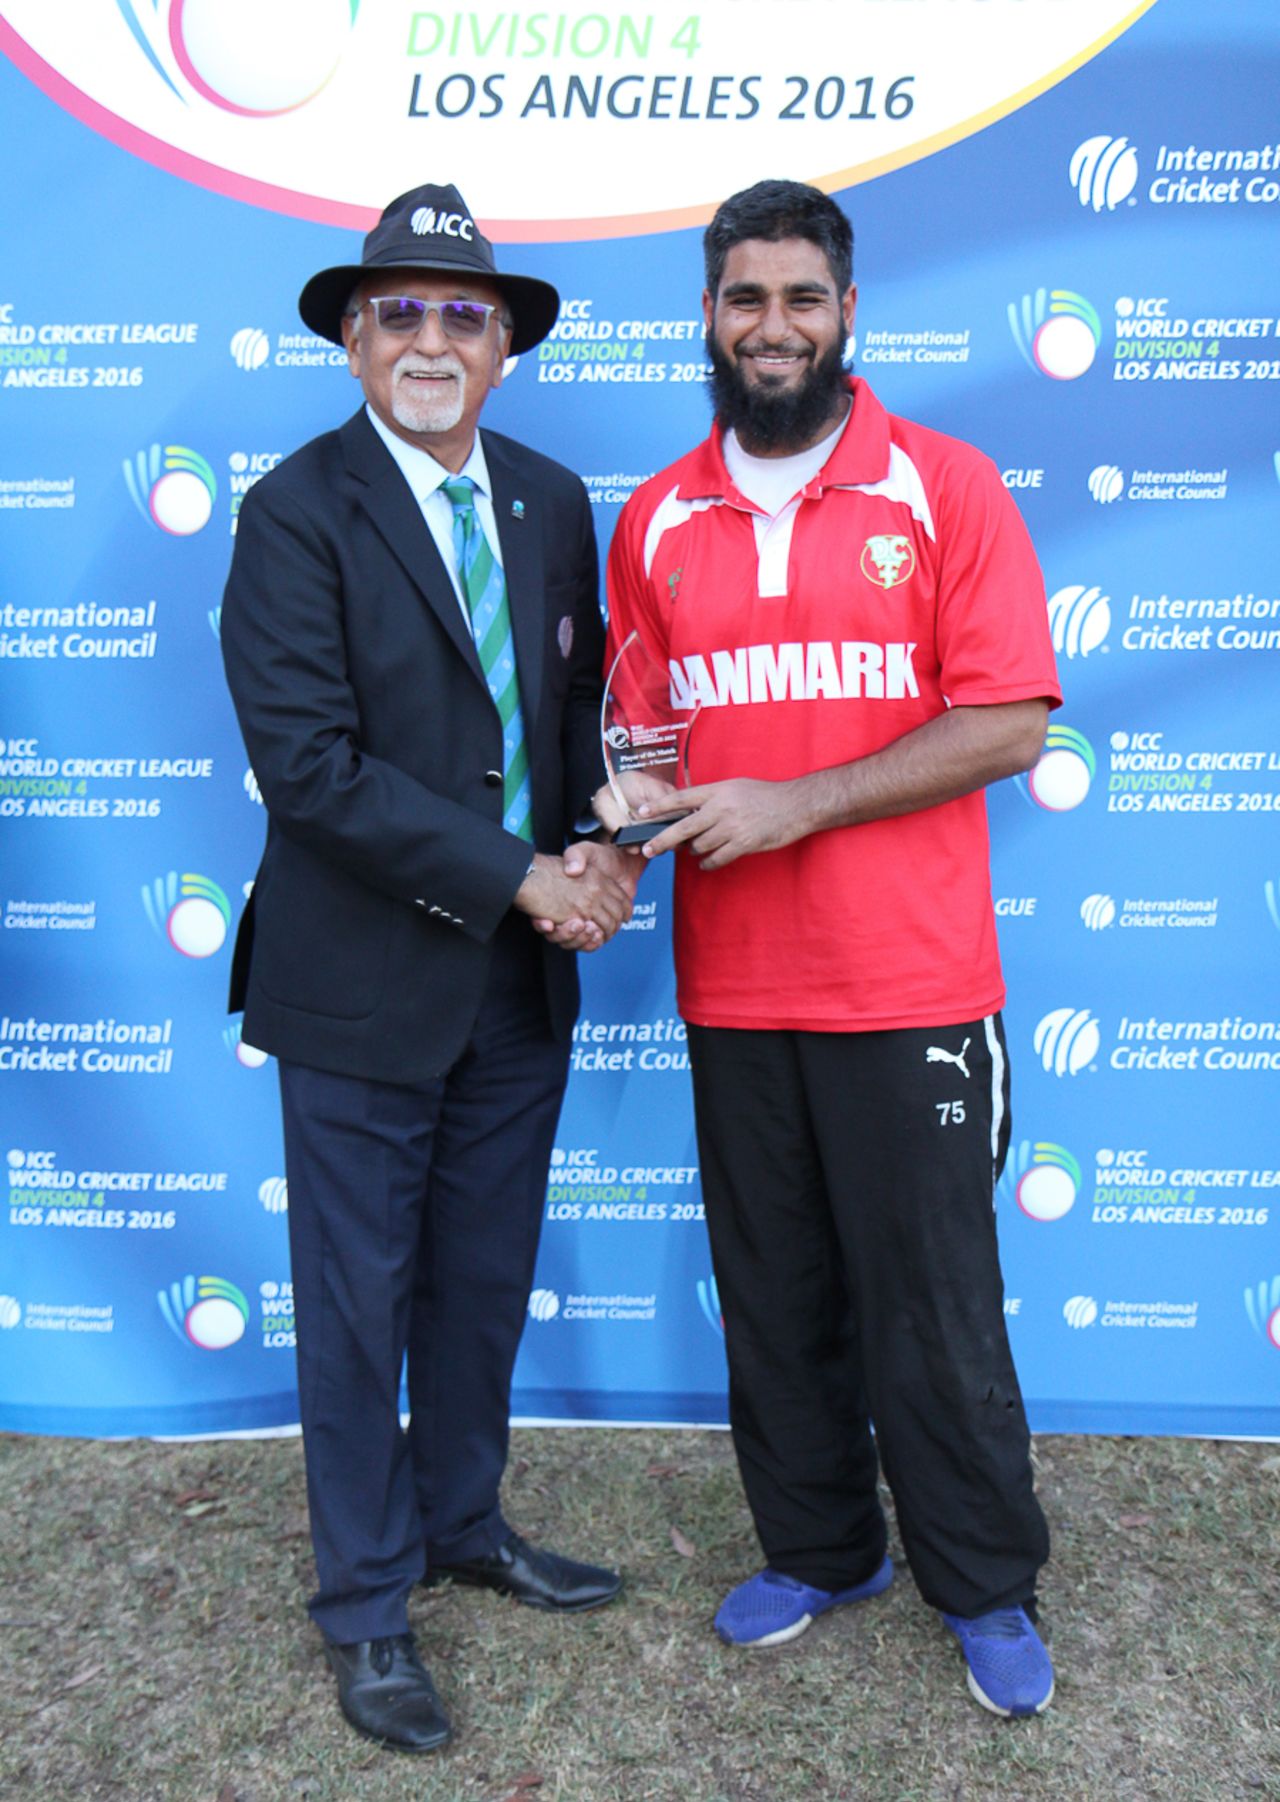 Zameer Khan accepts the Man of the Match award, USA v Denmark, ICC World Cricket League Division Four, Los Angeles, November 2, 2016